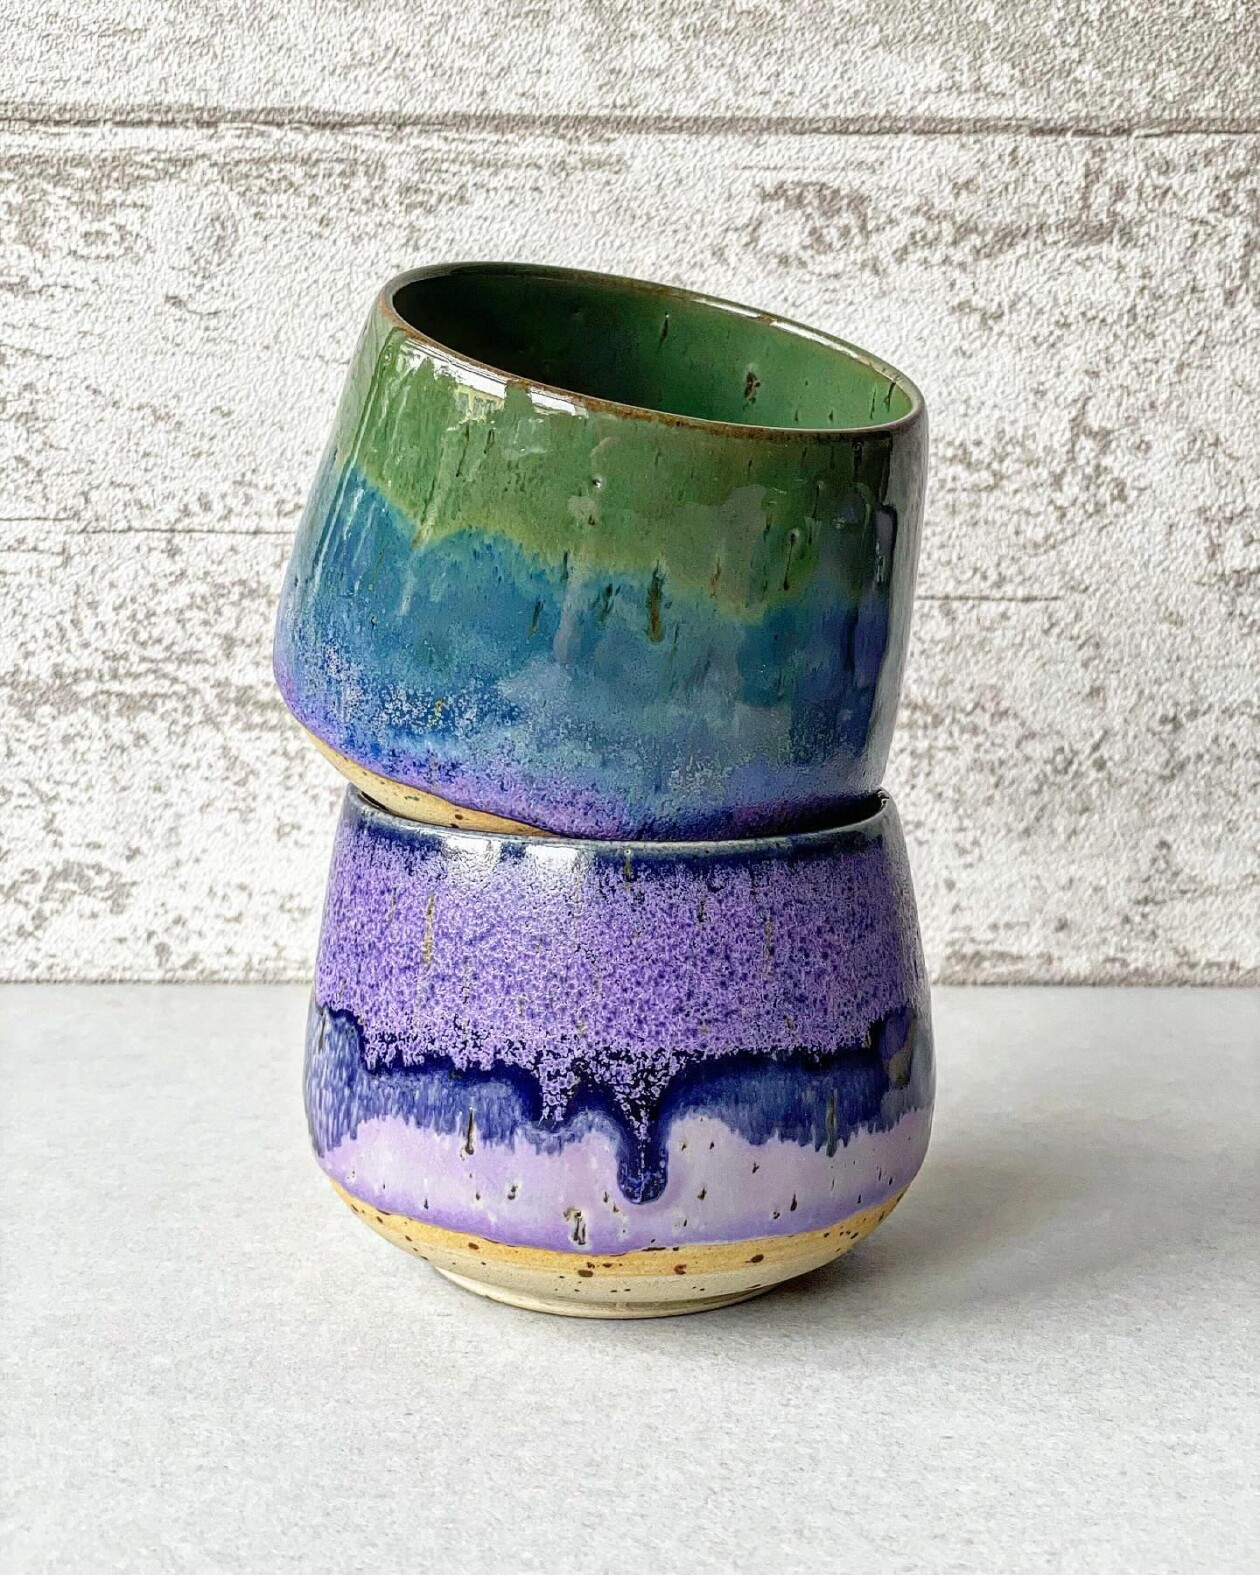 Ceramics With Vintage Motifs By Joanna Dylowska (12)